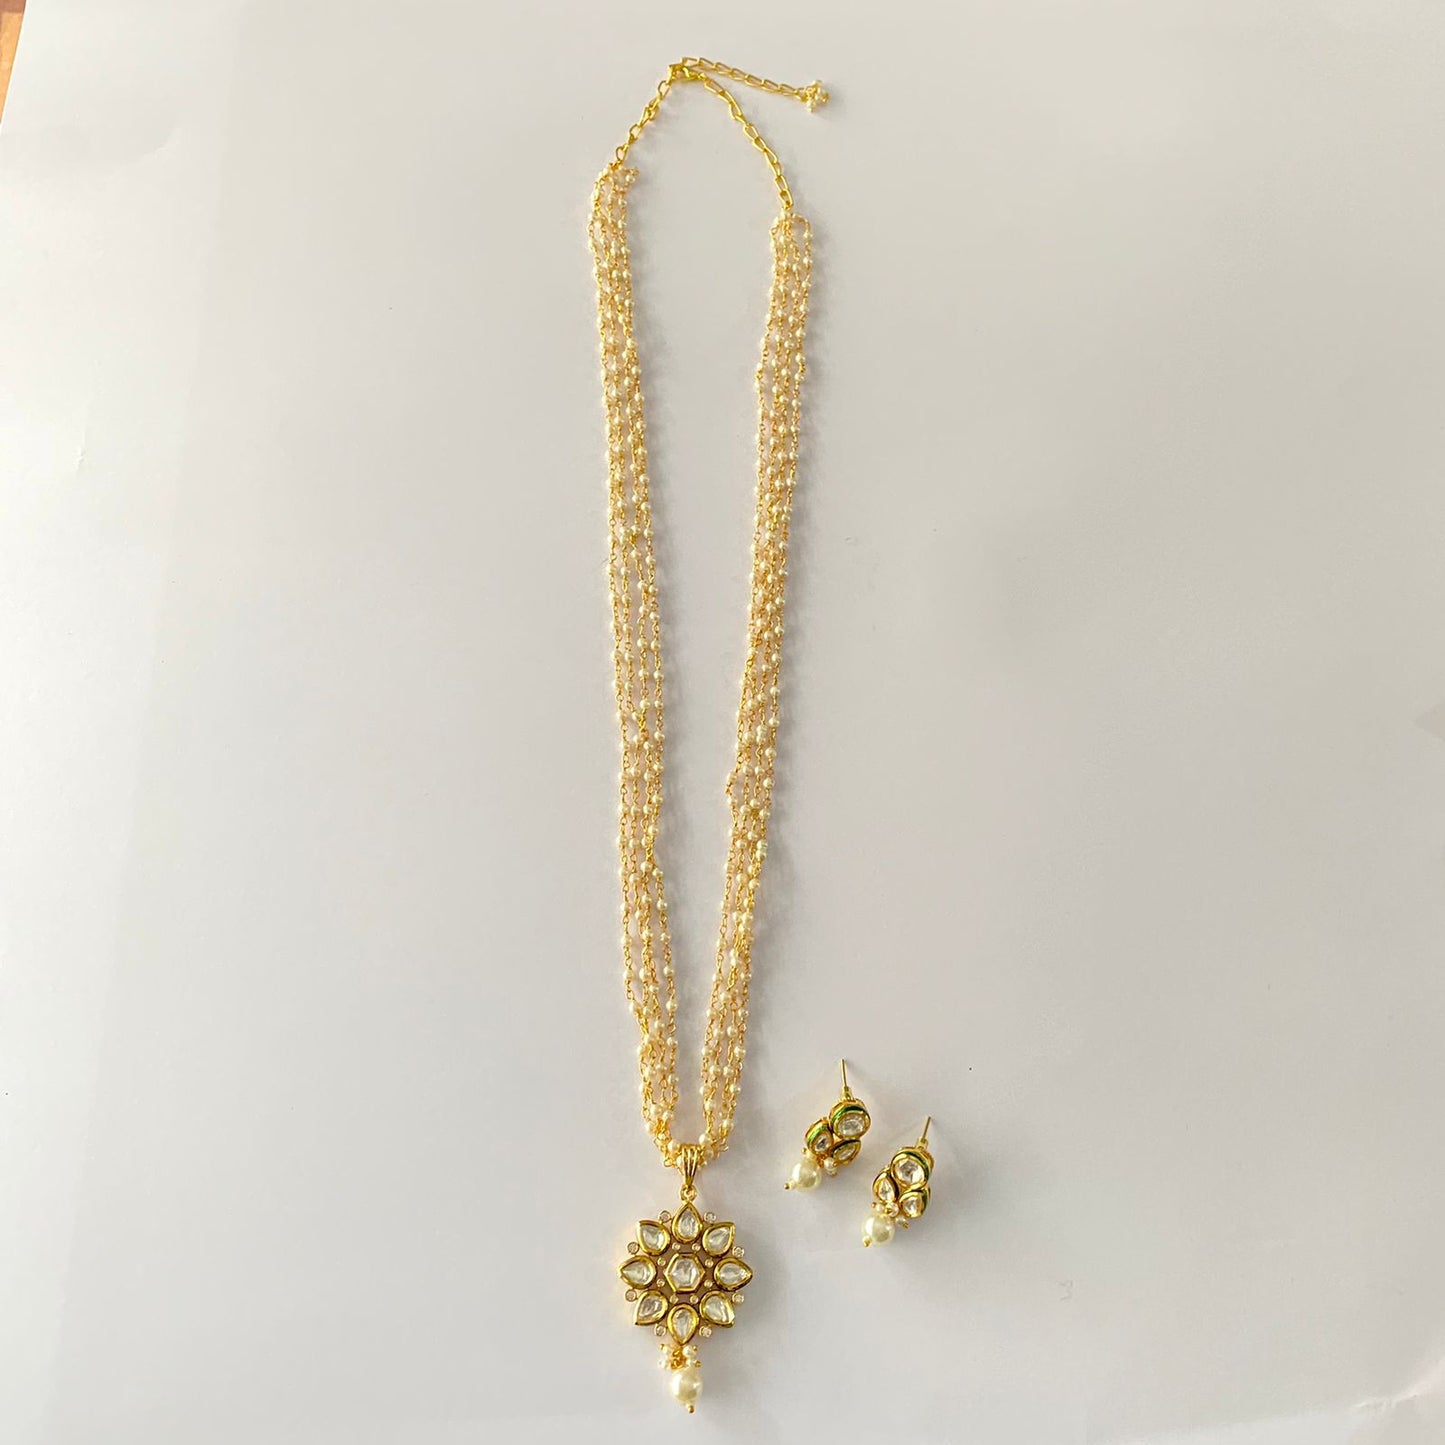 Kundan Pearl Necklace Set